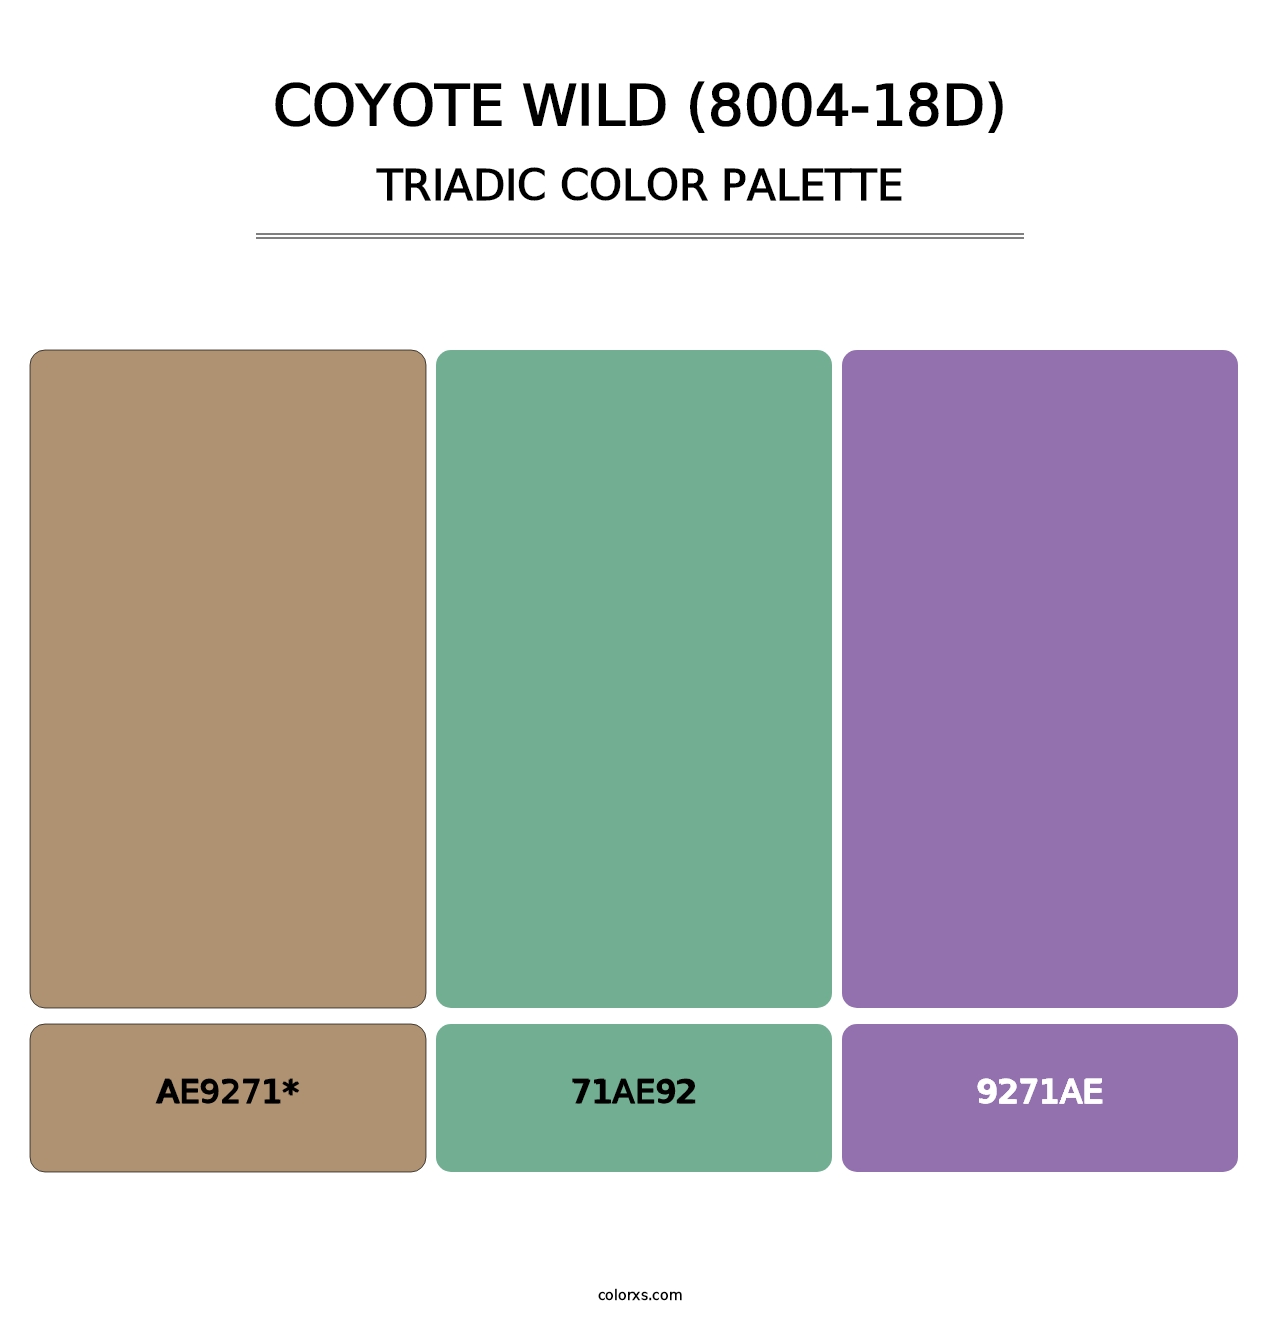 Coyote Wild (8004-18D) - Triadic Color Palette